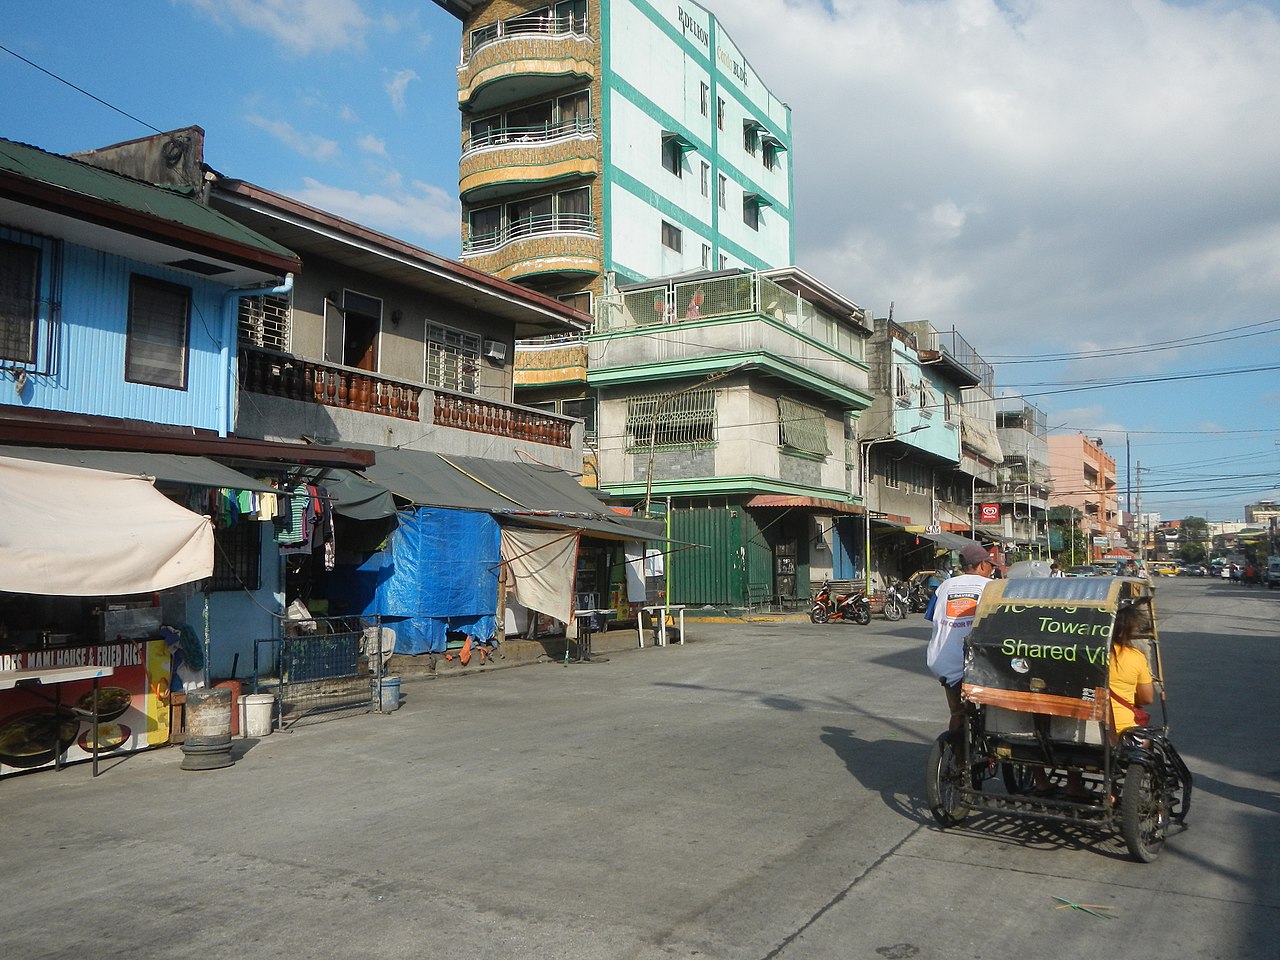 1280px-0503jfC-37_Road_Capulong_Raxabago_Streets_Barangays_Tondo%2C_Manilafvf.jpg